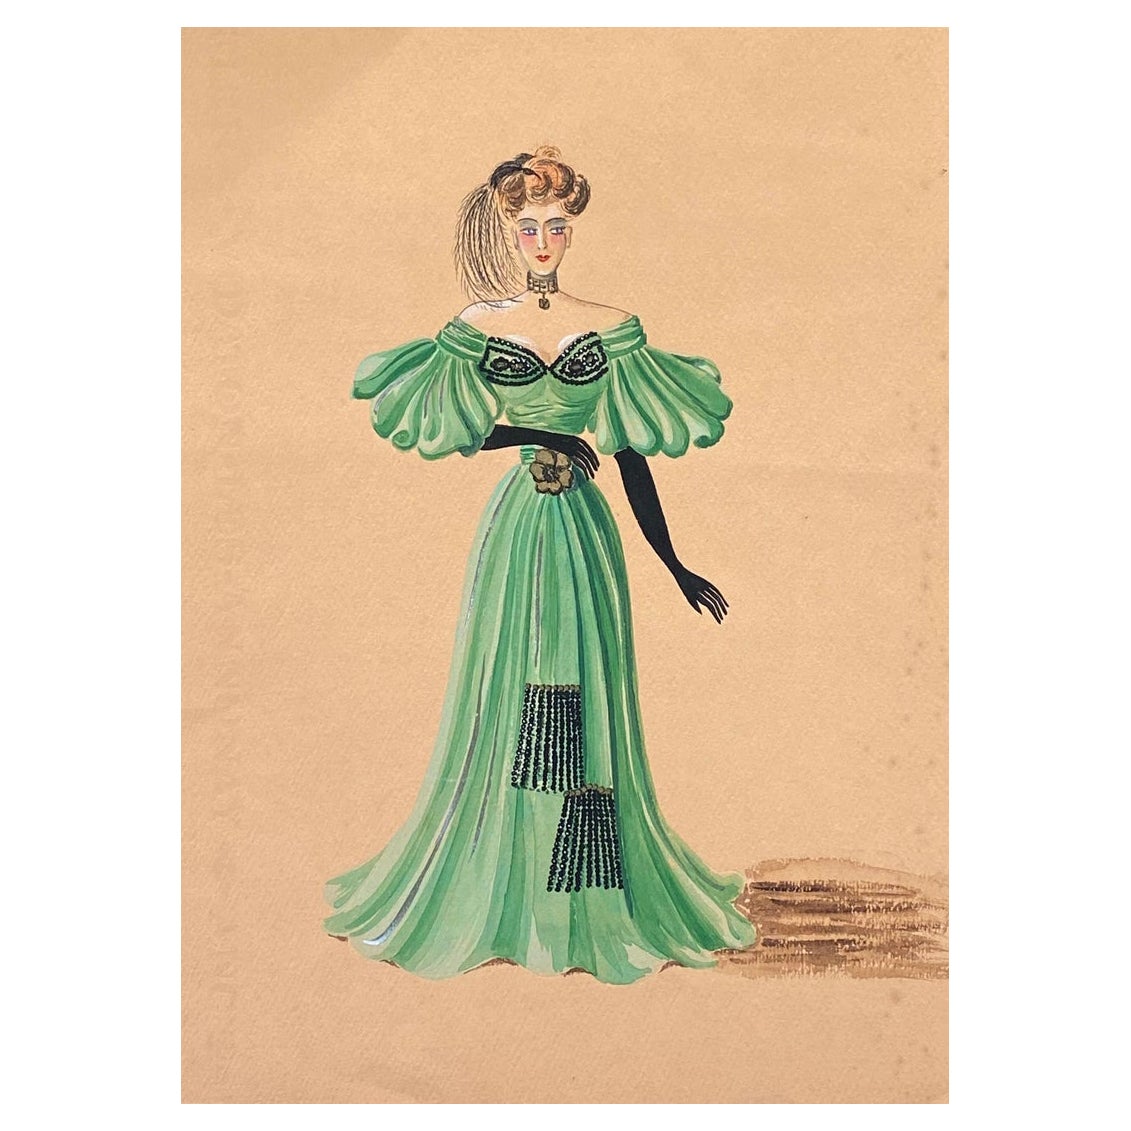 1940's Fashion Illustration - Lady in Dashing Green Ball Dress